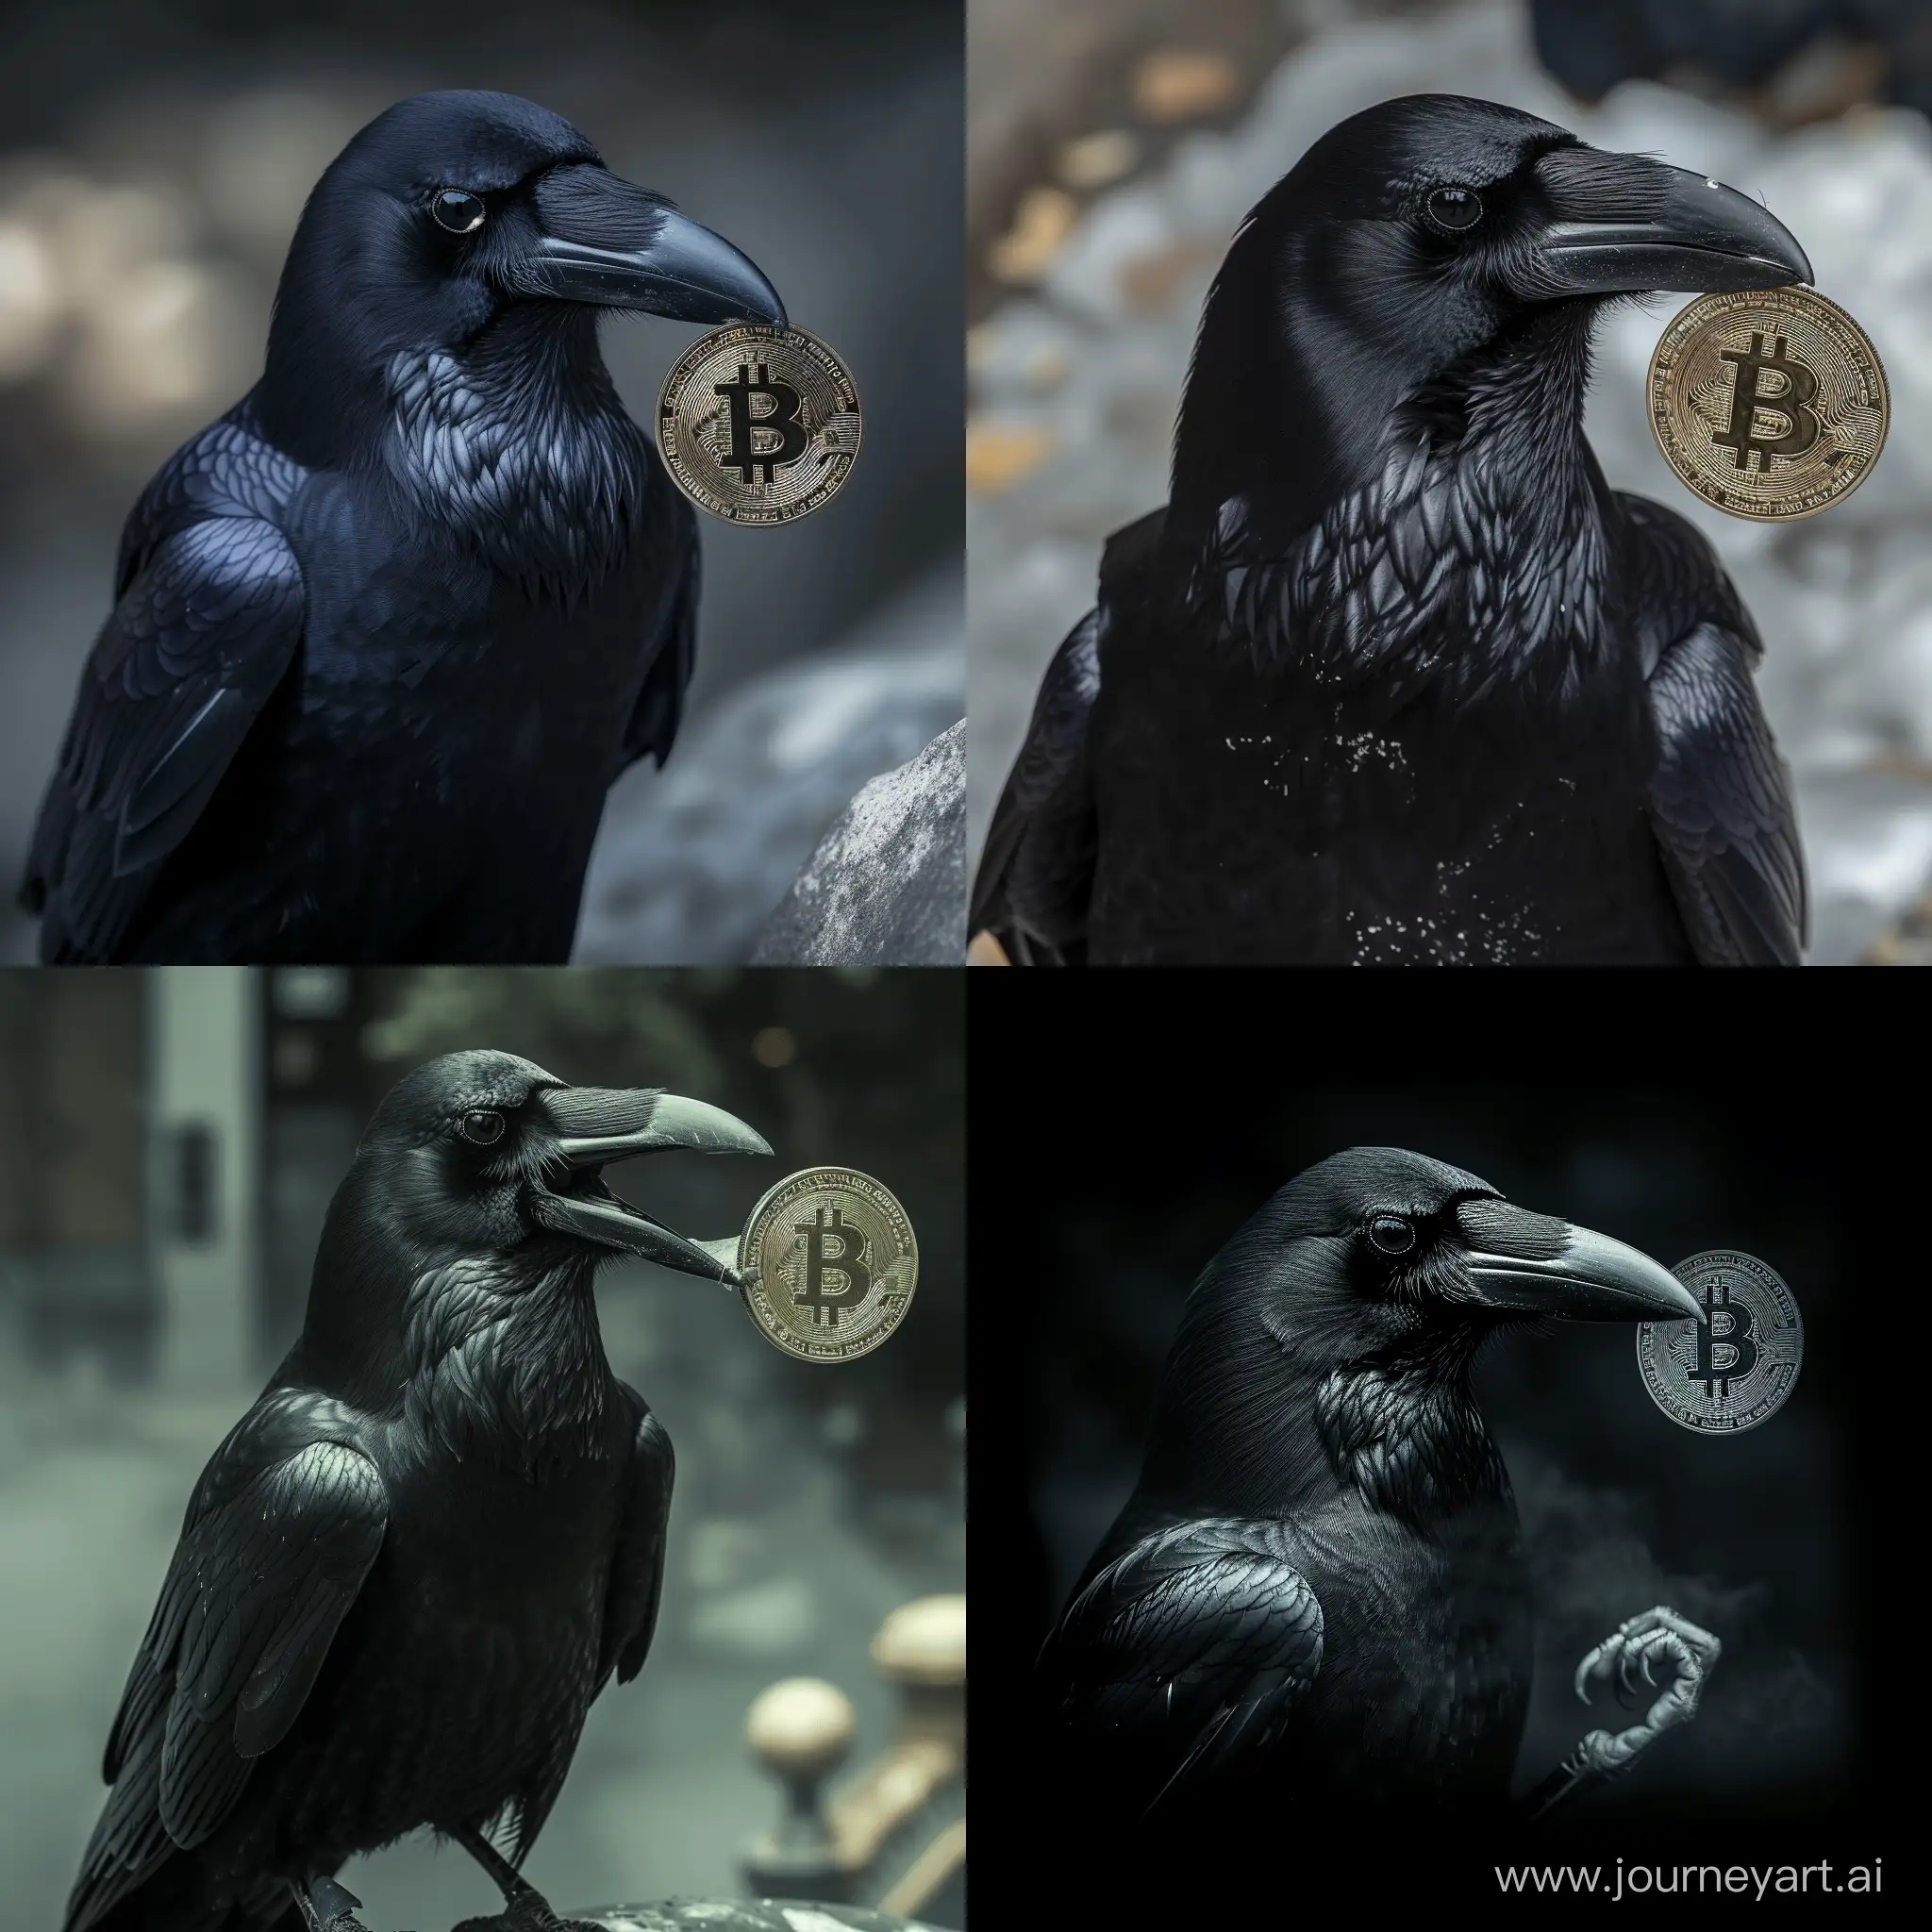 crow holding a bitcoin coin in its beak cyberpunk